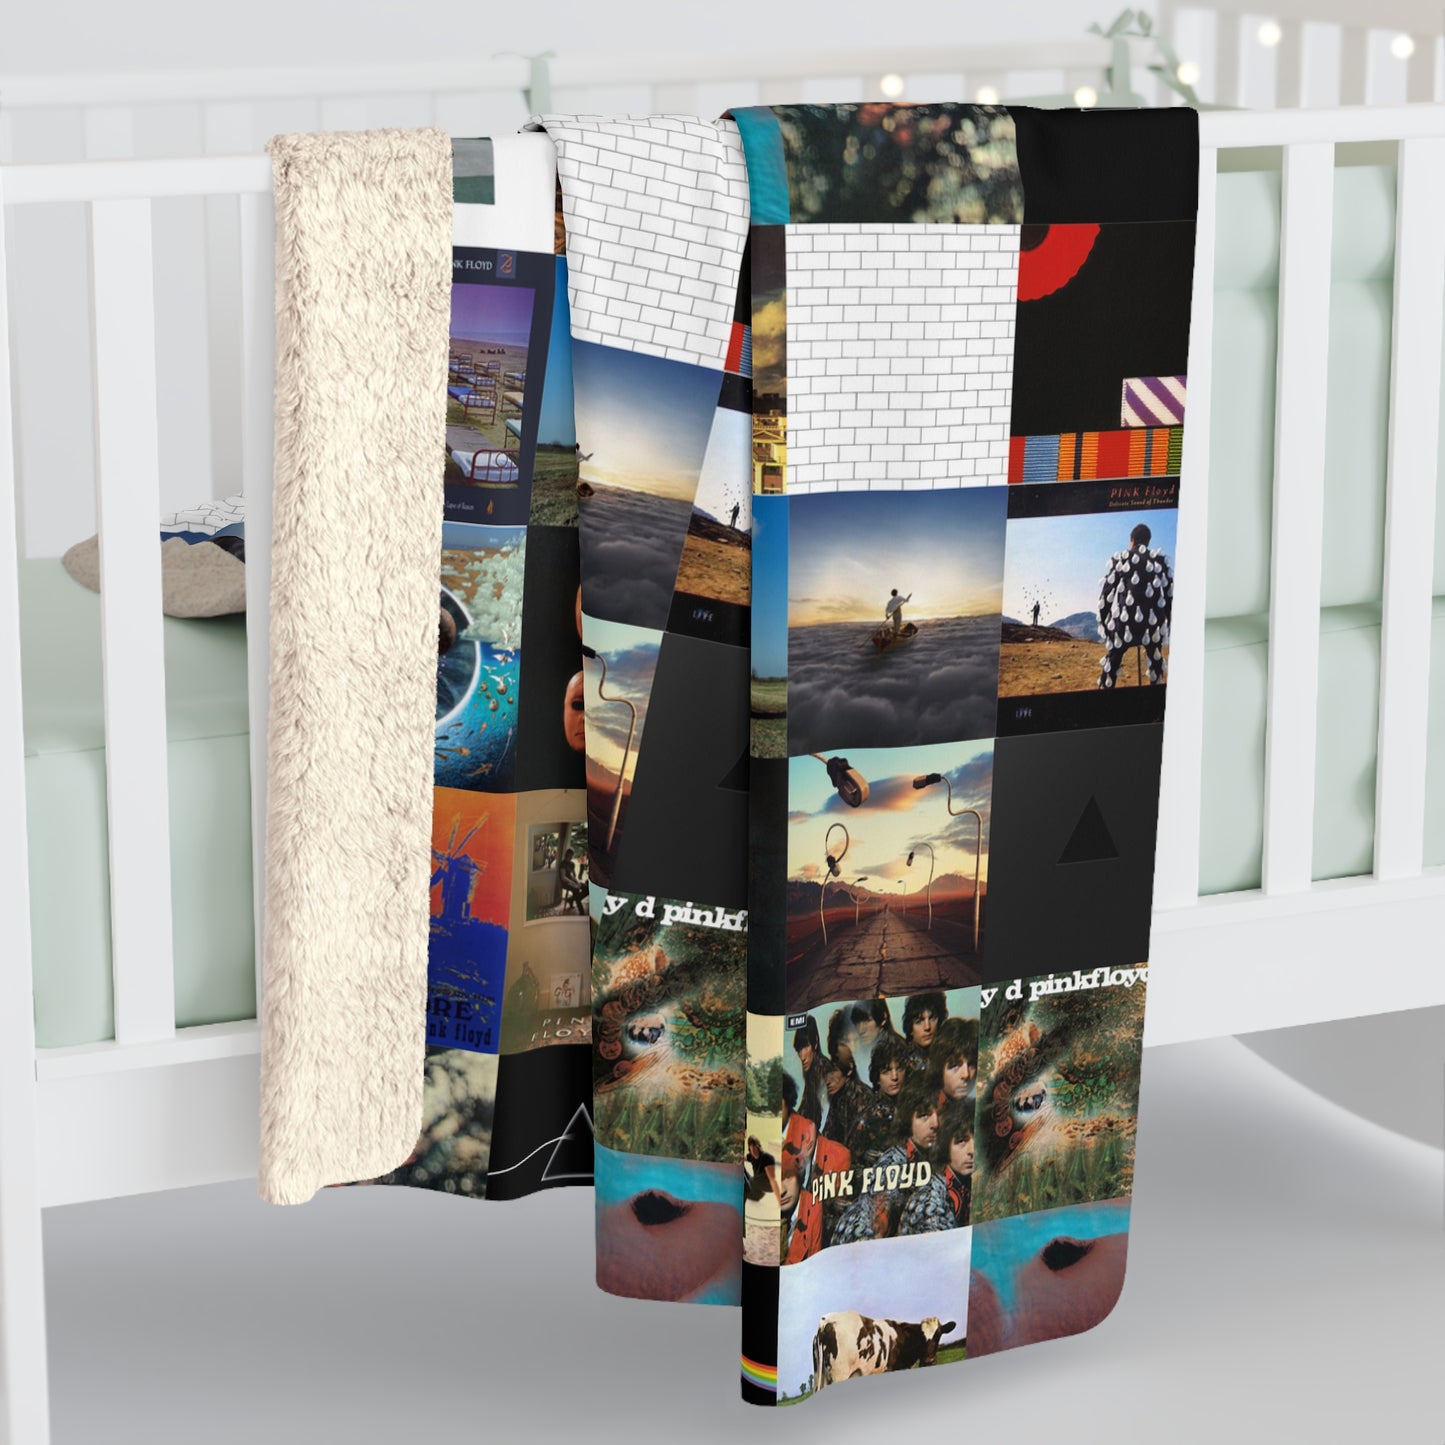 Pink Floyd Album Cover Collage Sherpa Fleece Blanket